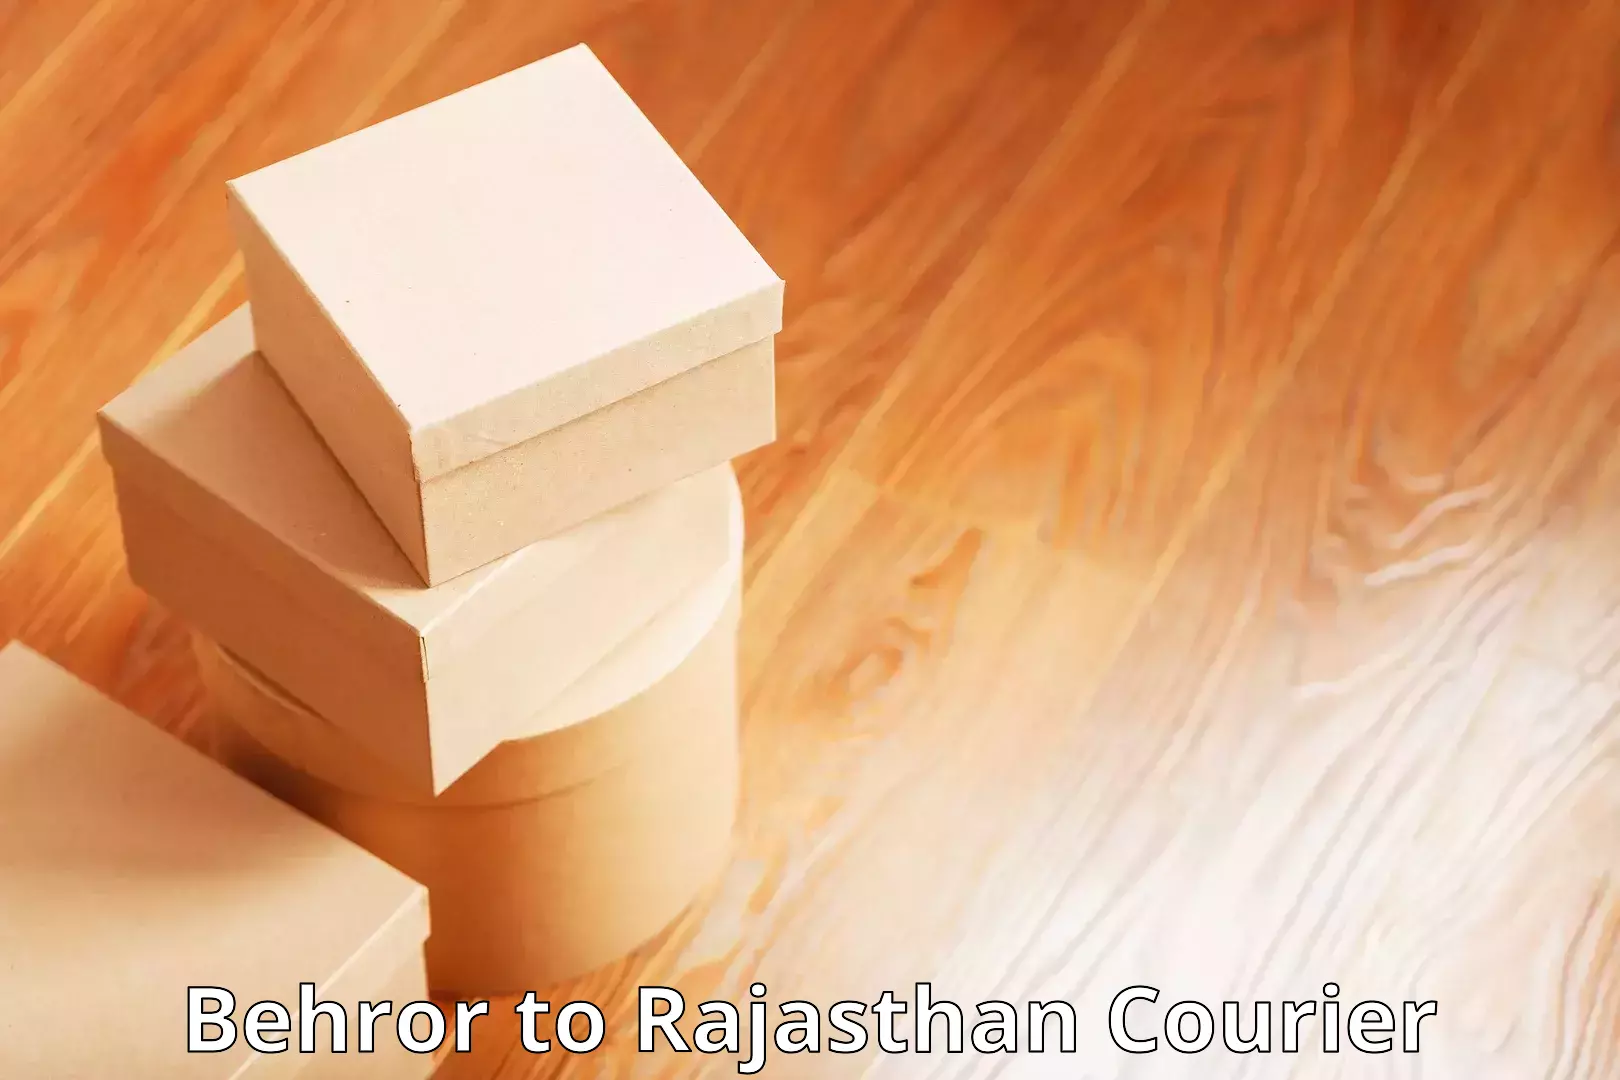 Logistics service provider Behror to Rajasthan